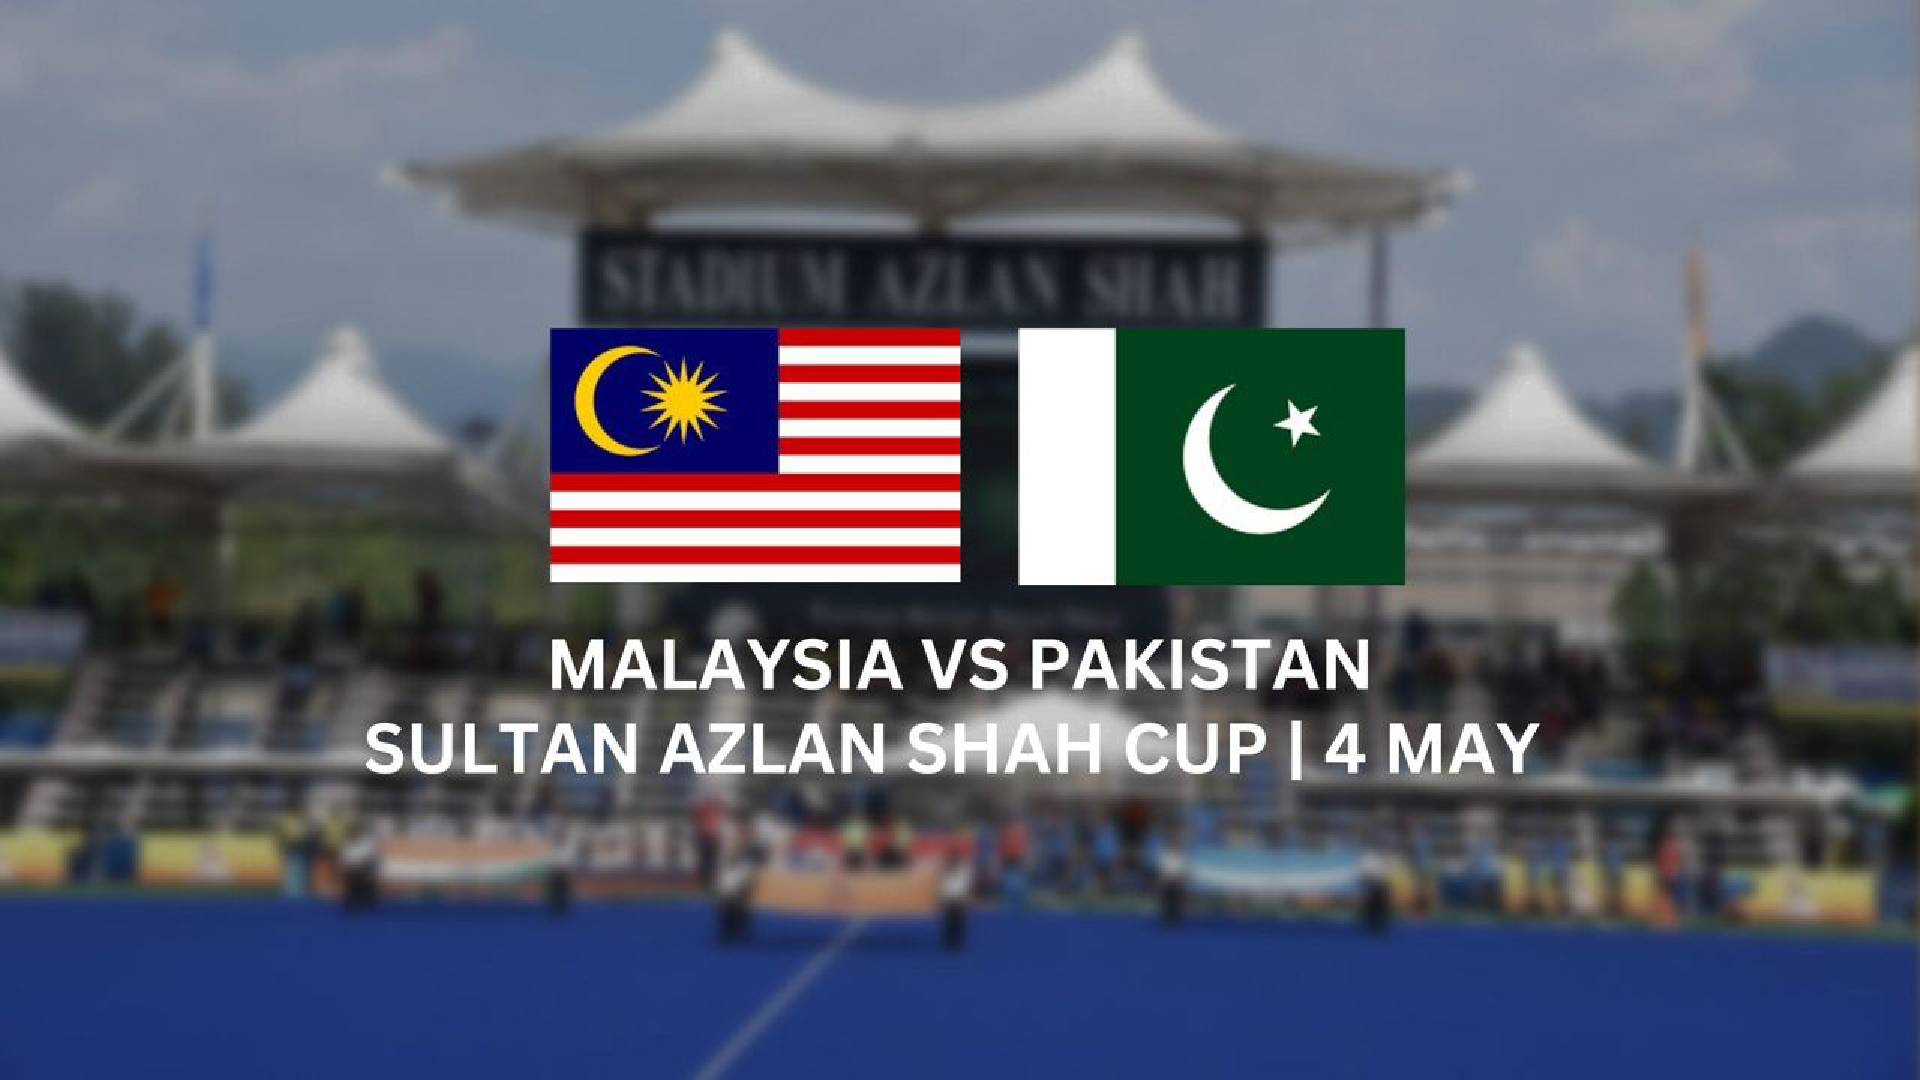 Sultan Azlan Shah Cup: Malaysia vs Pakistan (Live Streaming)